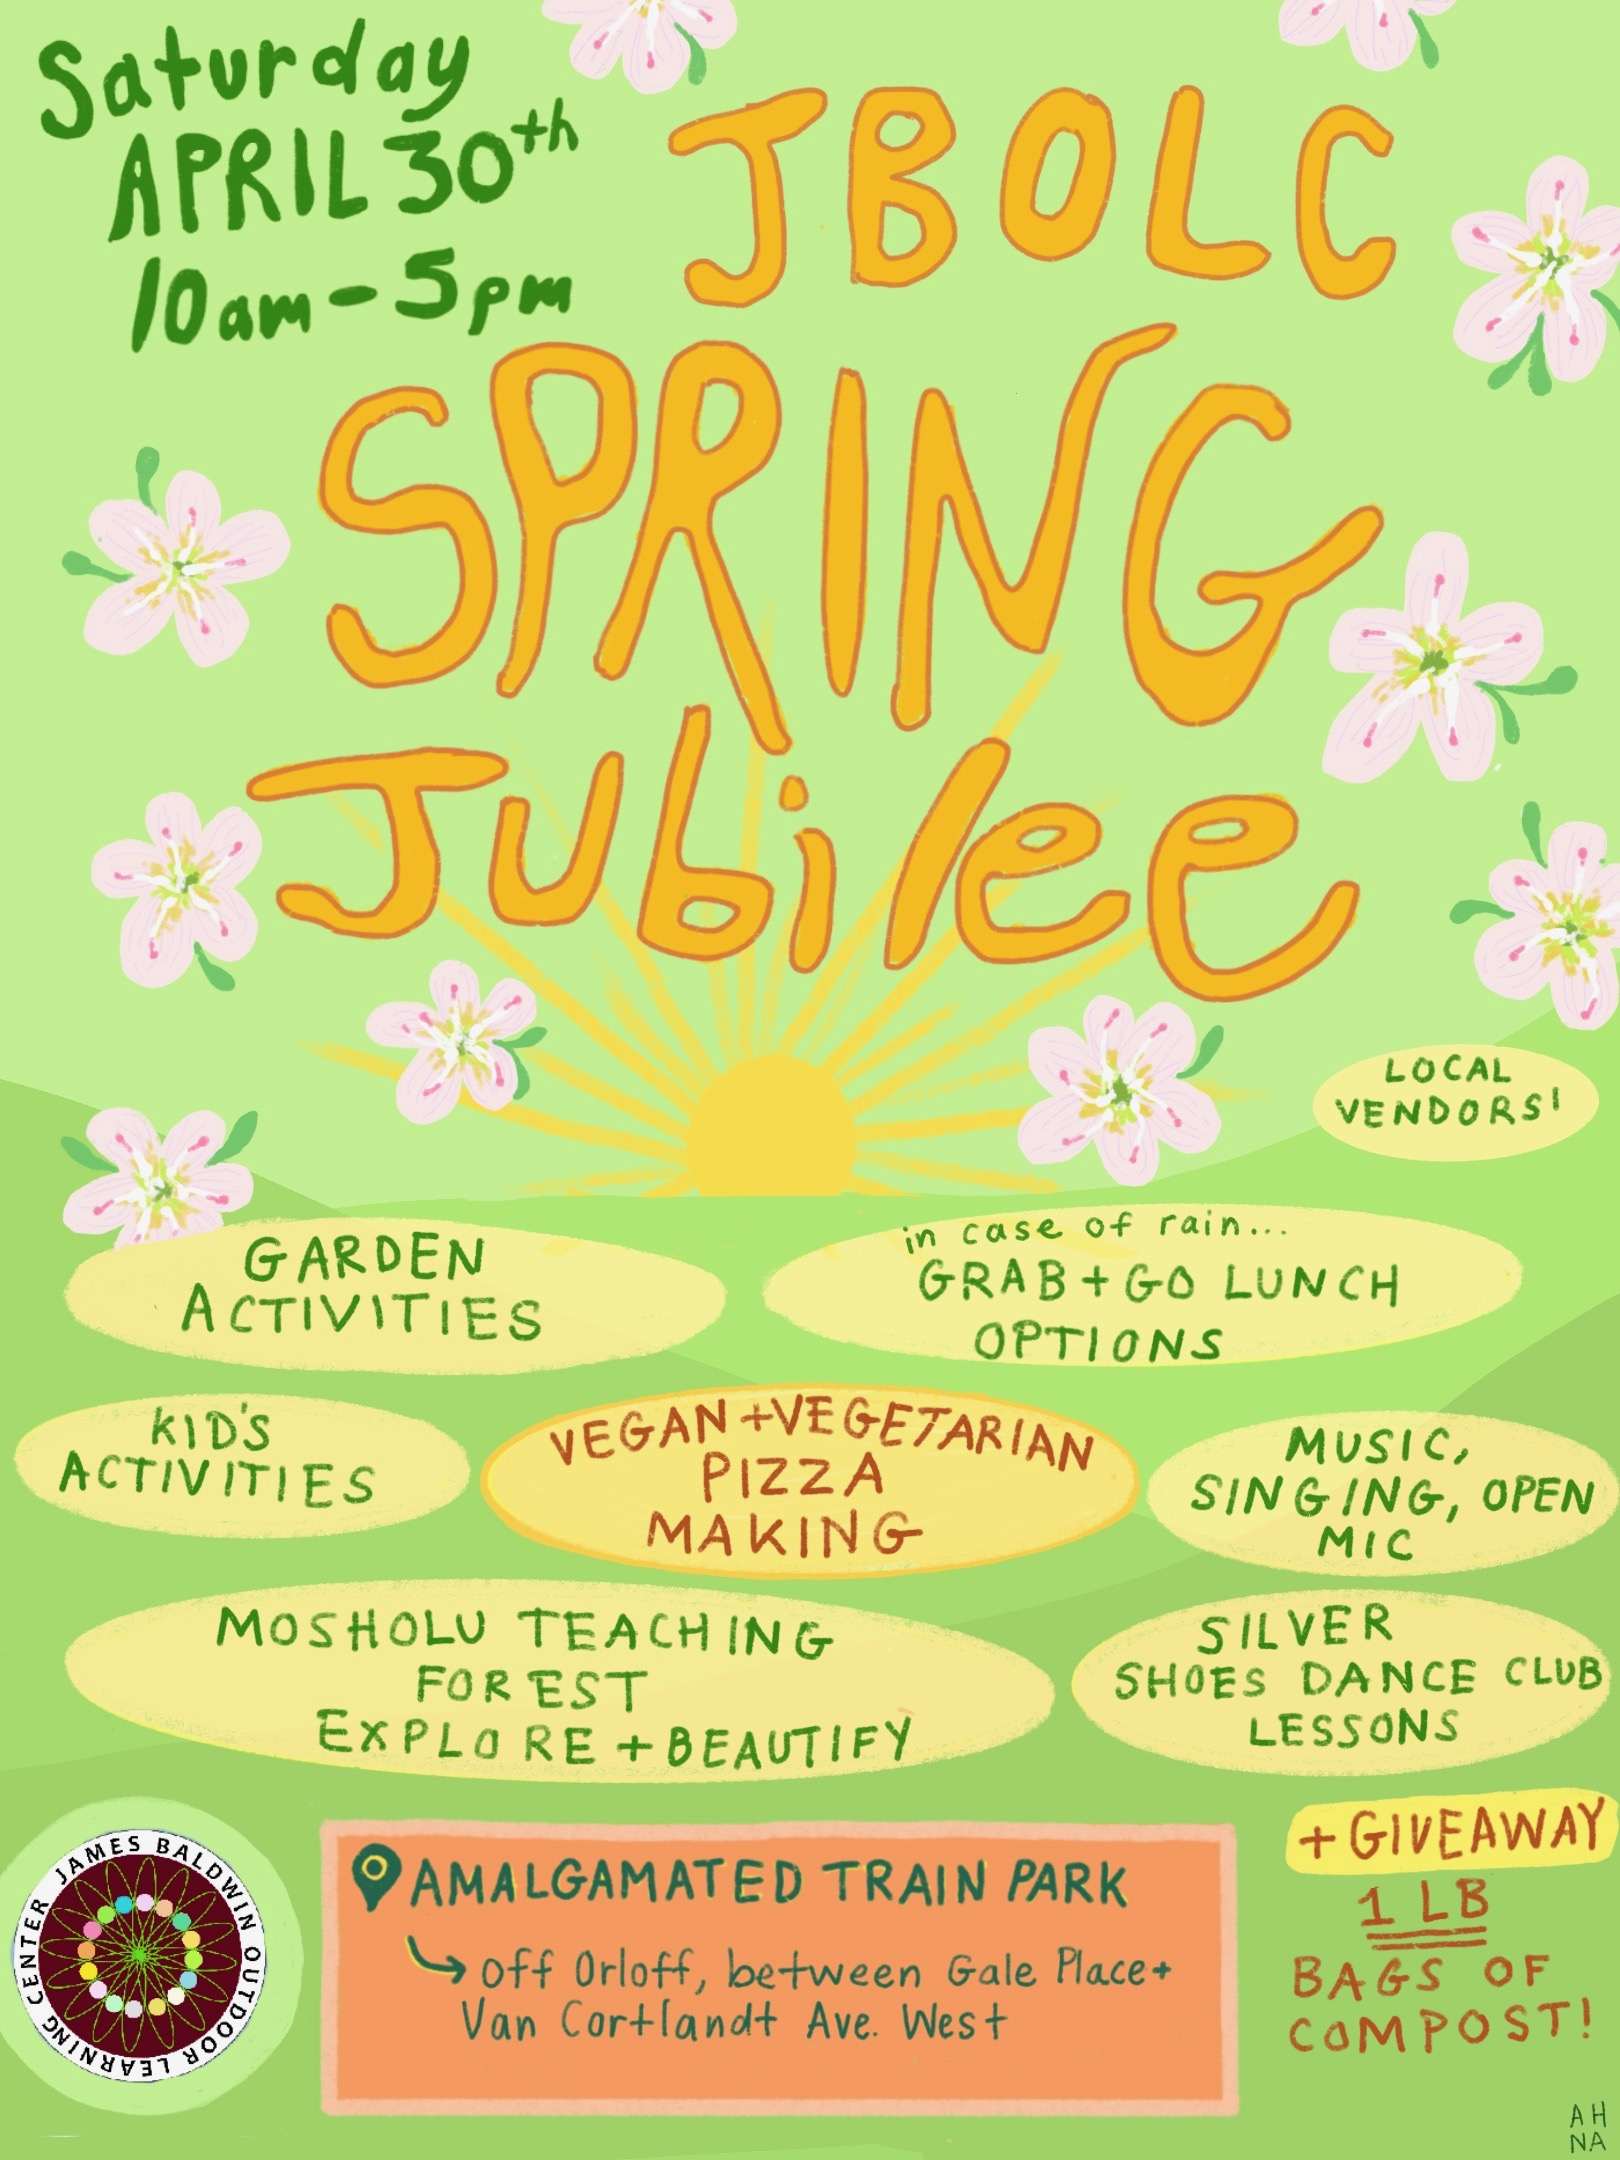 JBOLC Spring Jubilee poster